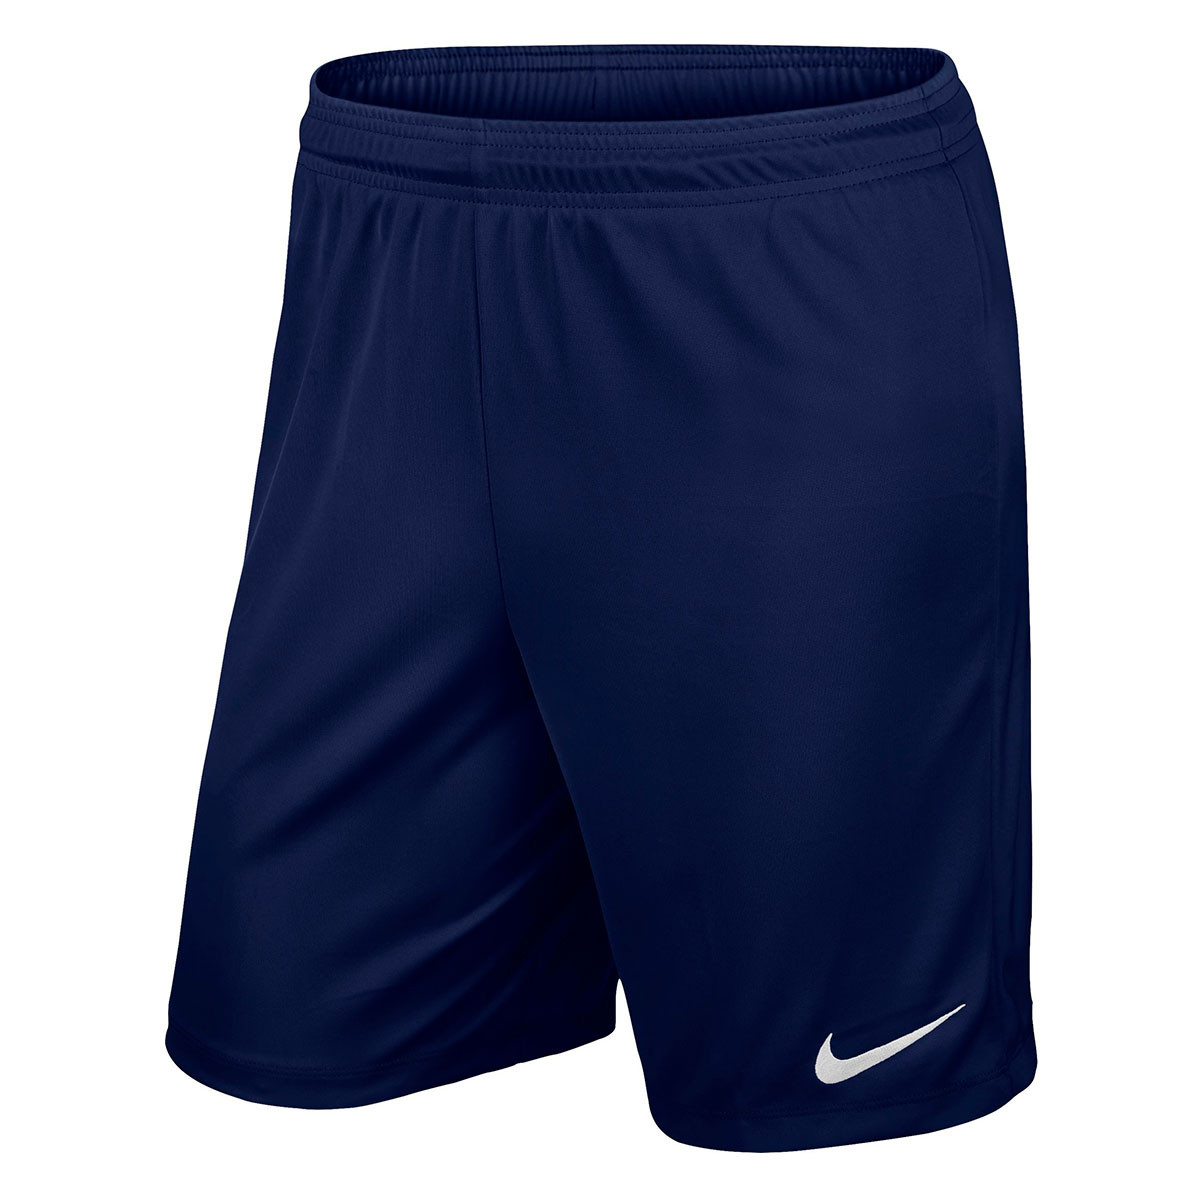 Shorts Nike Park II Knit Midnight navy-White - Football store Fútbol Emotion